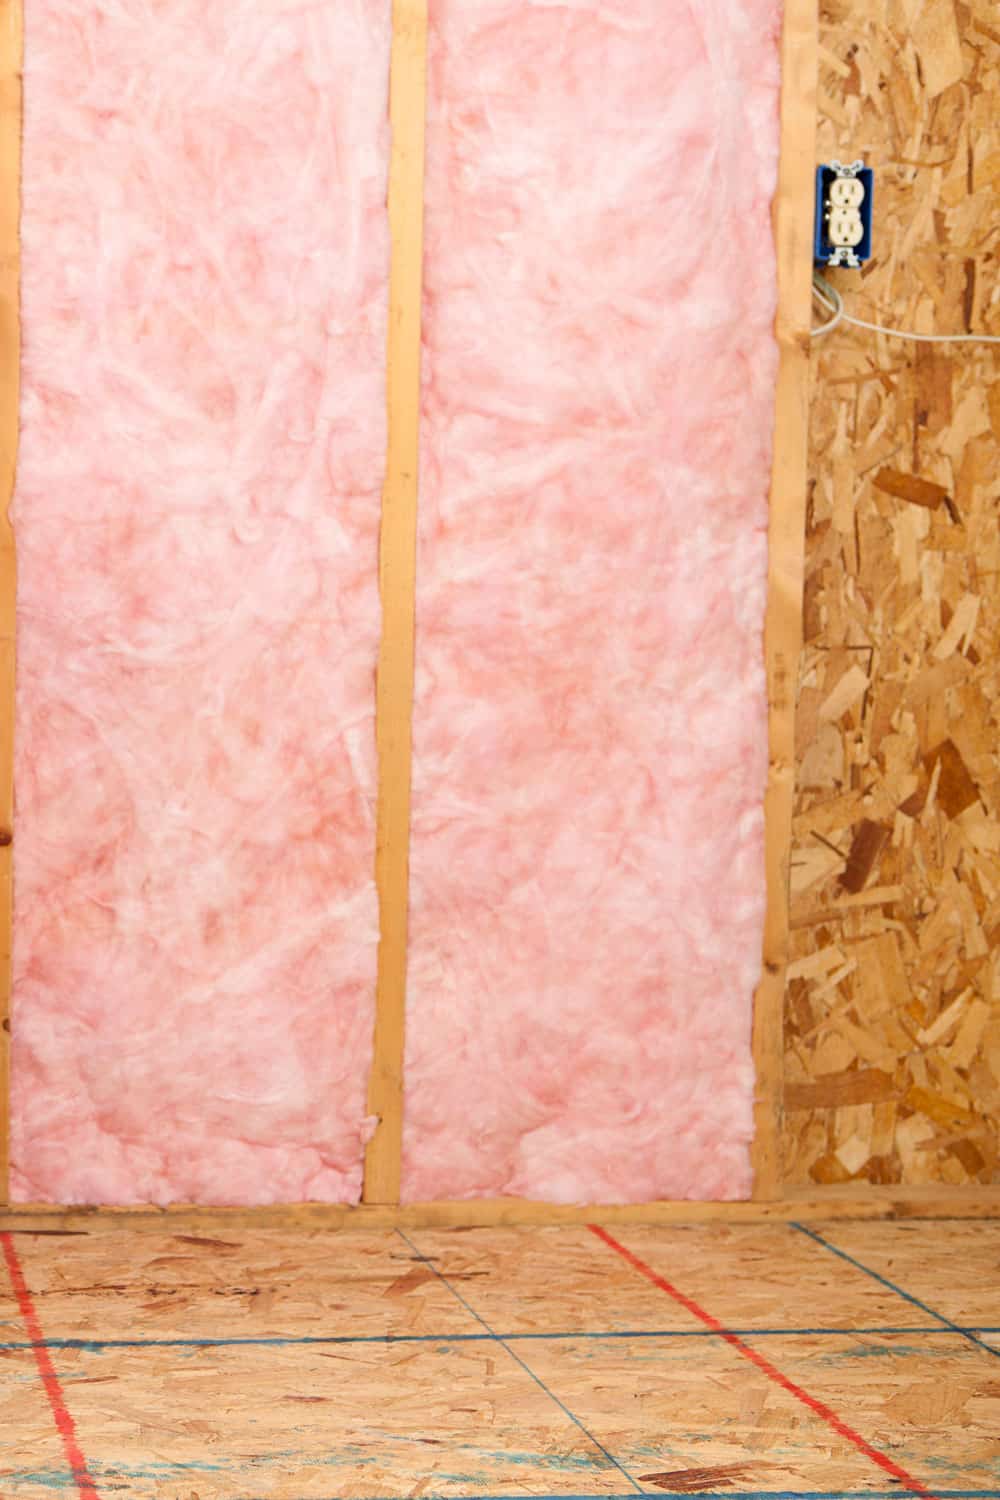 Batt insulation between the wooden framing insulation